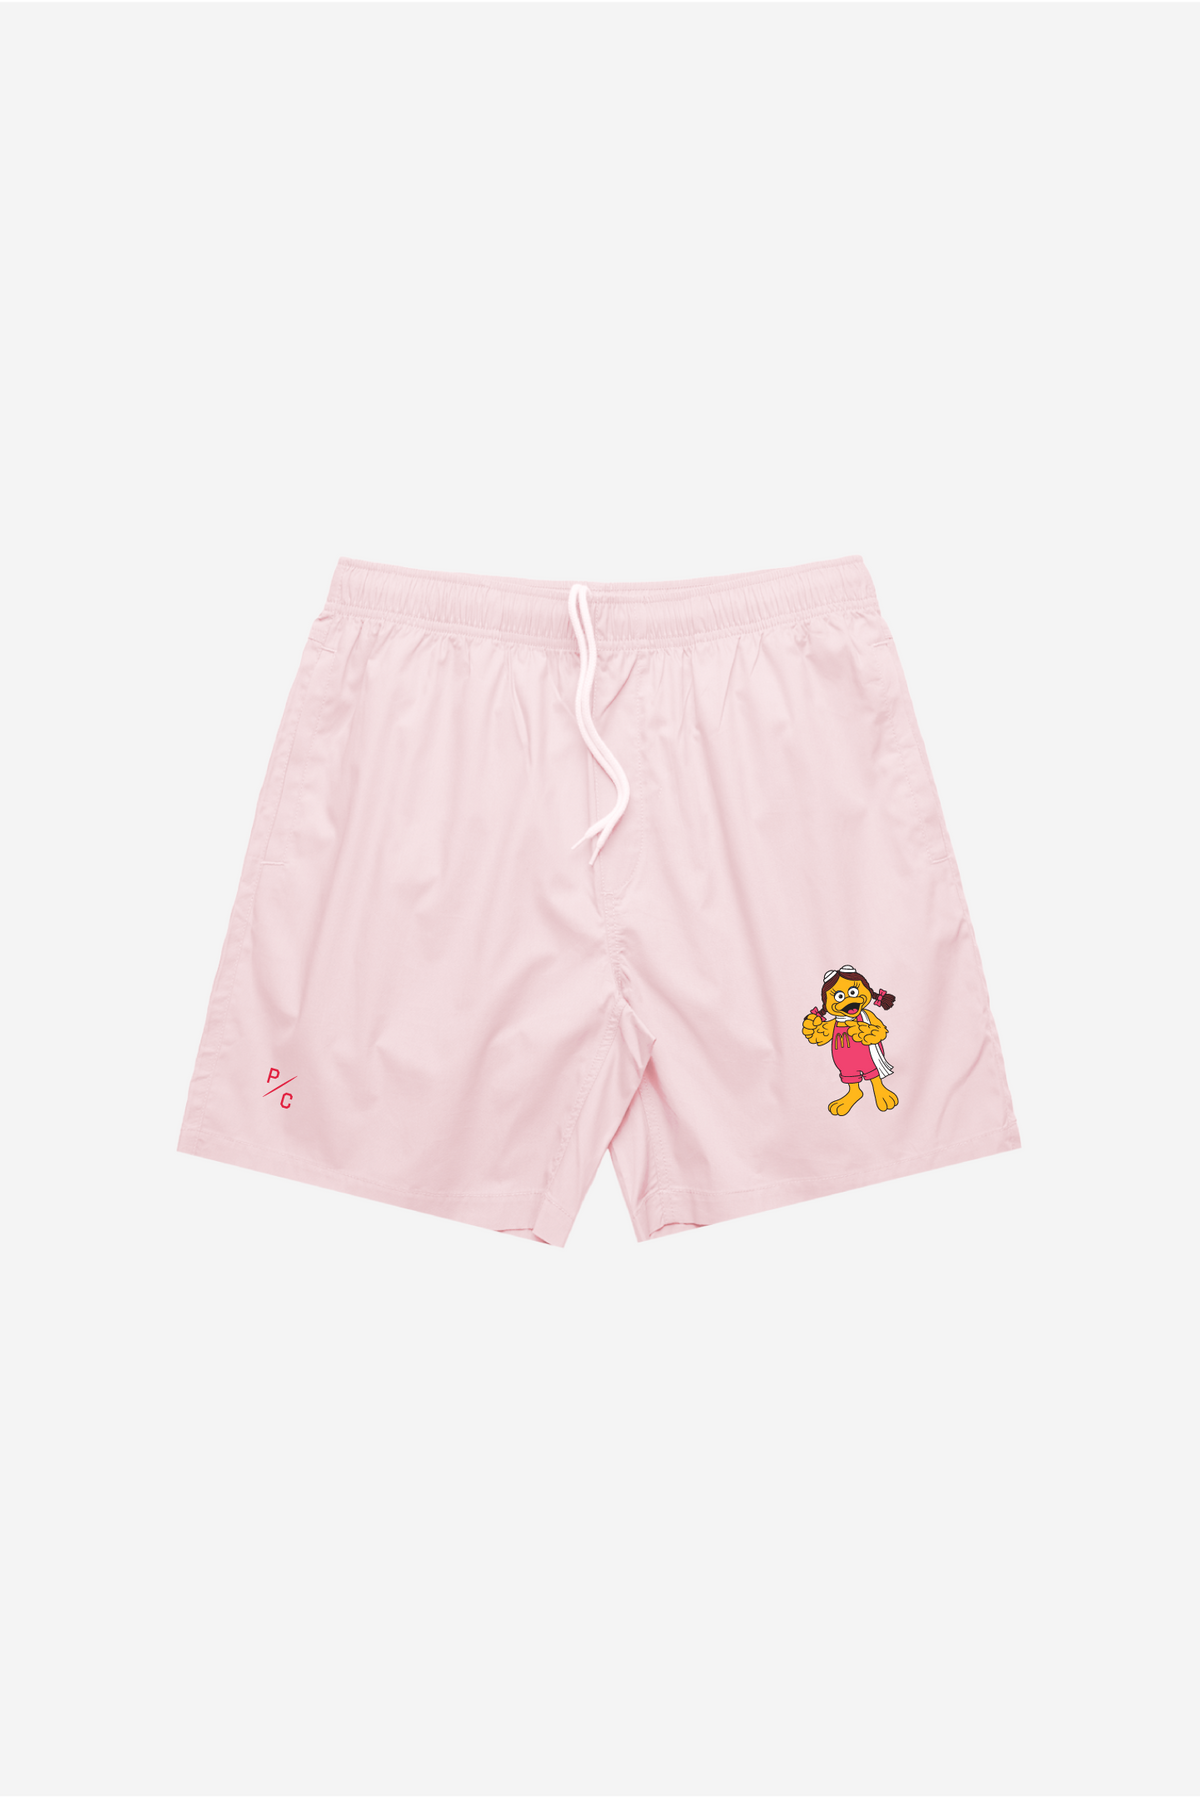 Birdie Board Shorts - Pink